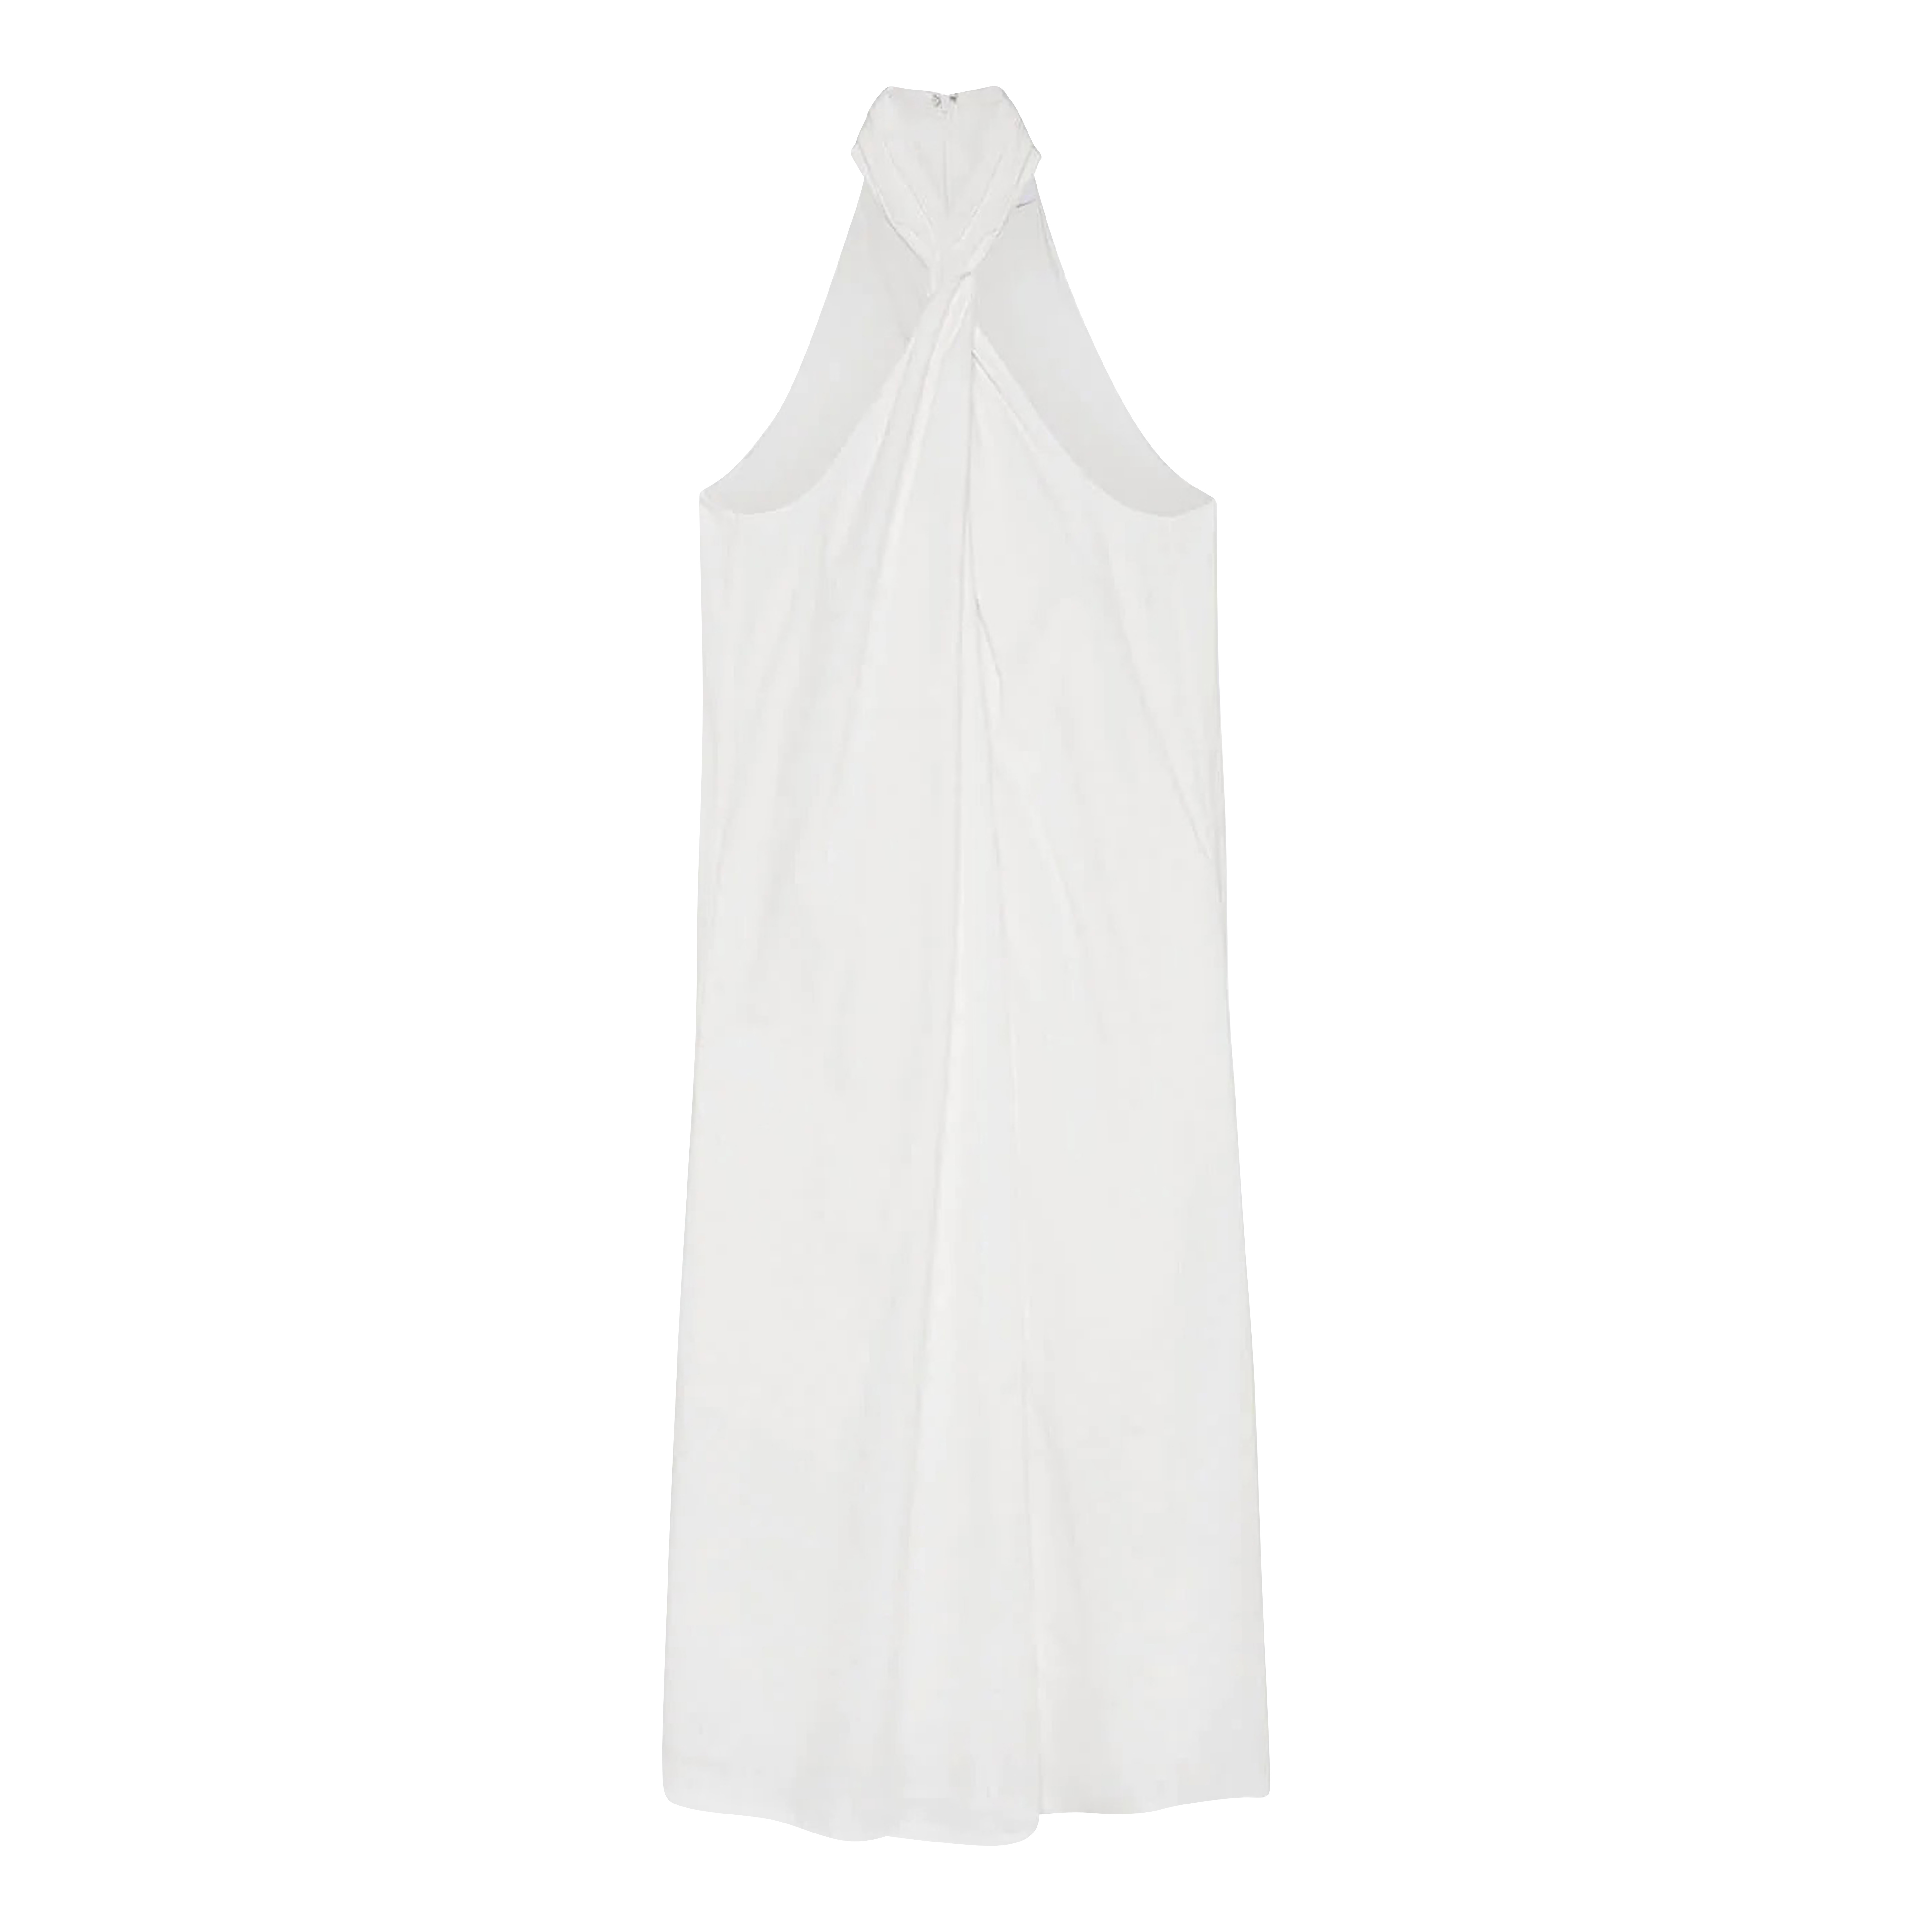 Anine Bing Cosette Dress in White